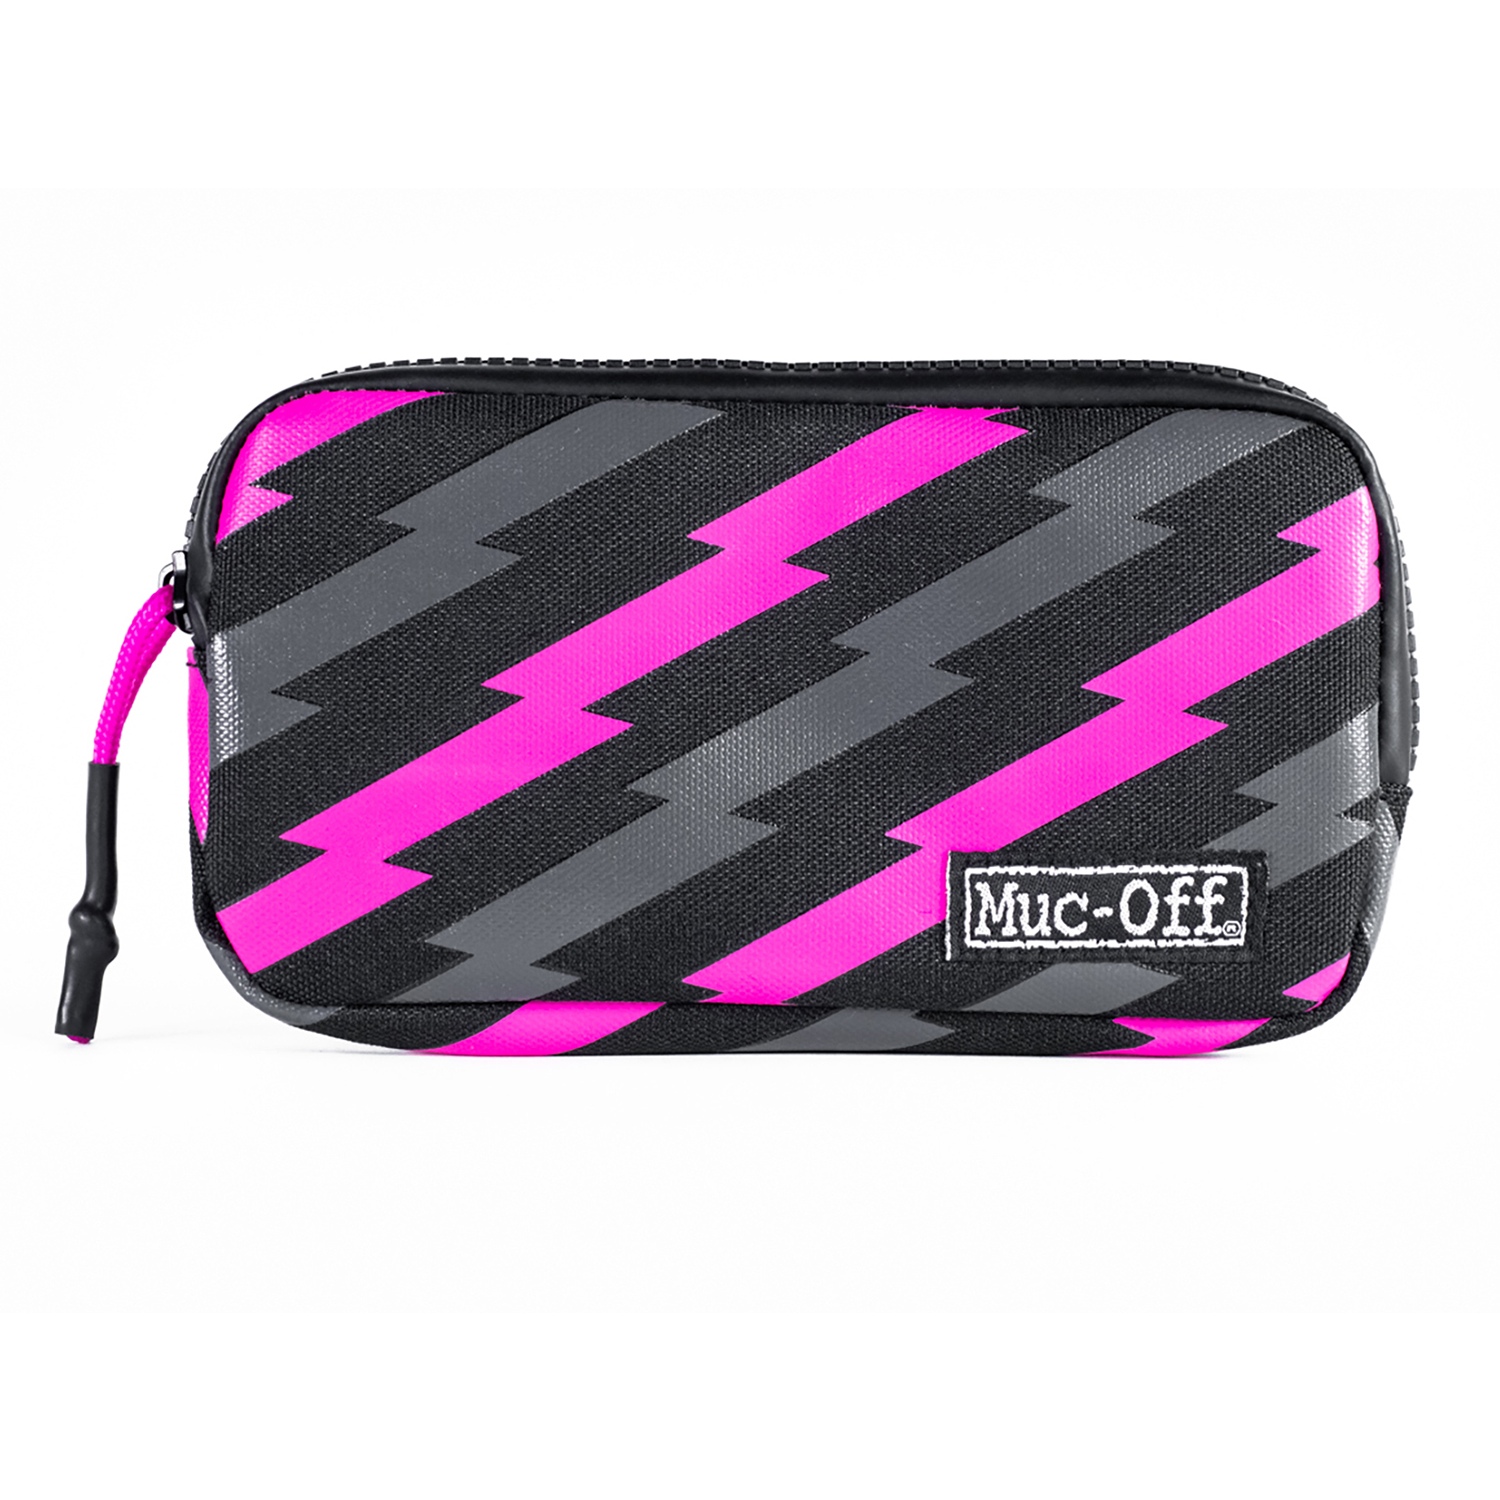 Productfoto van Muc-Off Essentials Case - Accessoires Tas - bolt/pink